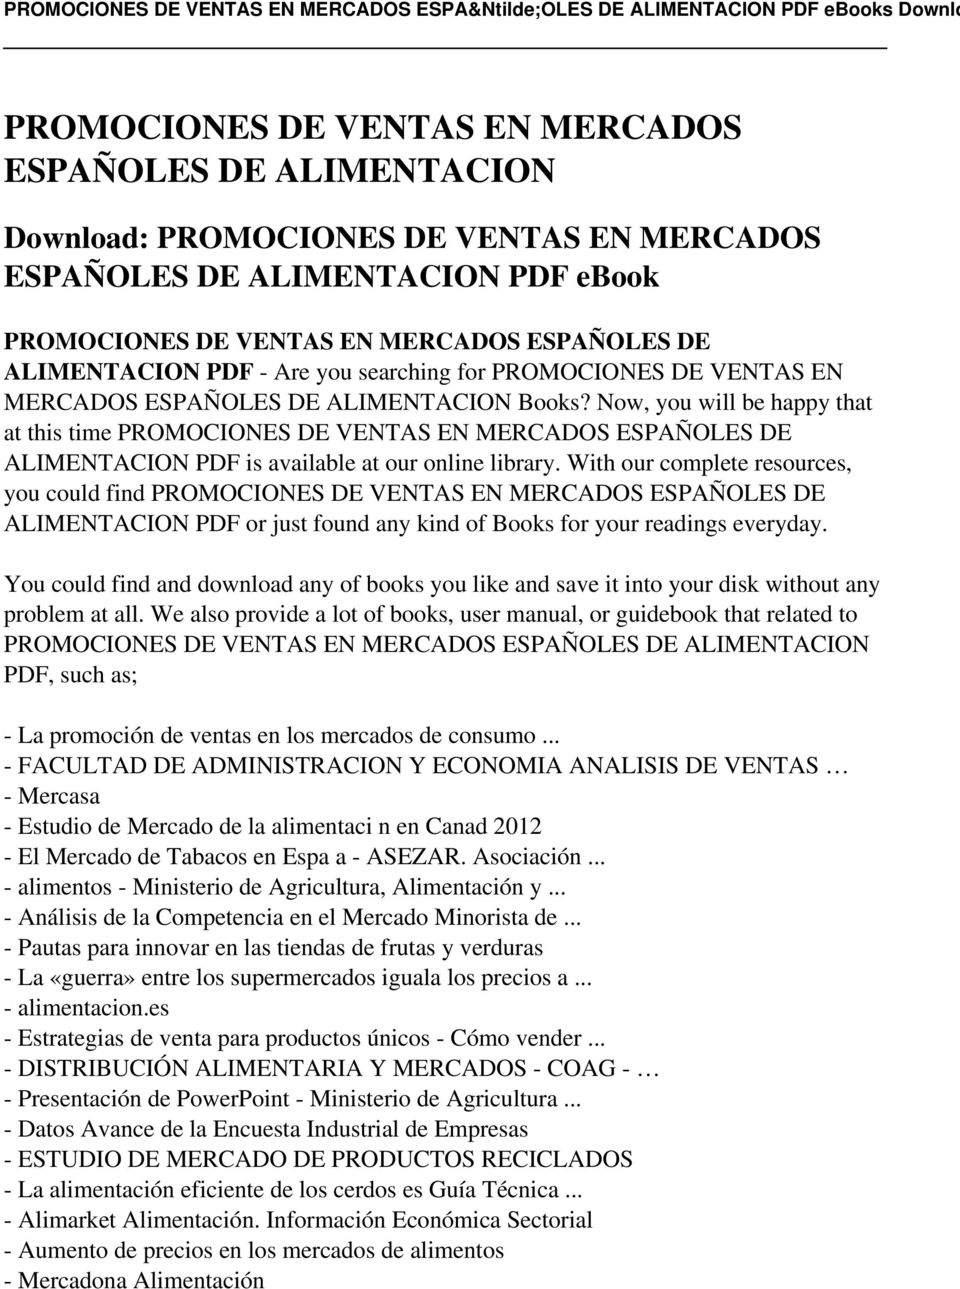 Now, you will be happy that at this time PROMOCIONES DE VENTAS EN MERCADOS ESPAÑOLES DE ALIMENTACION PDF is available at our online library.